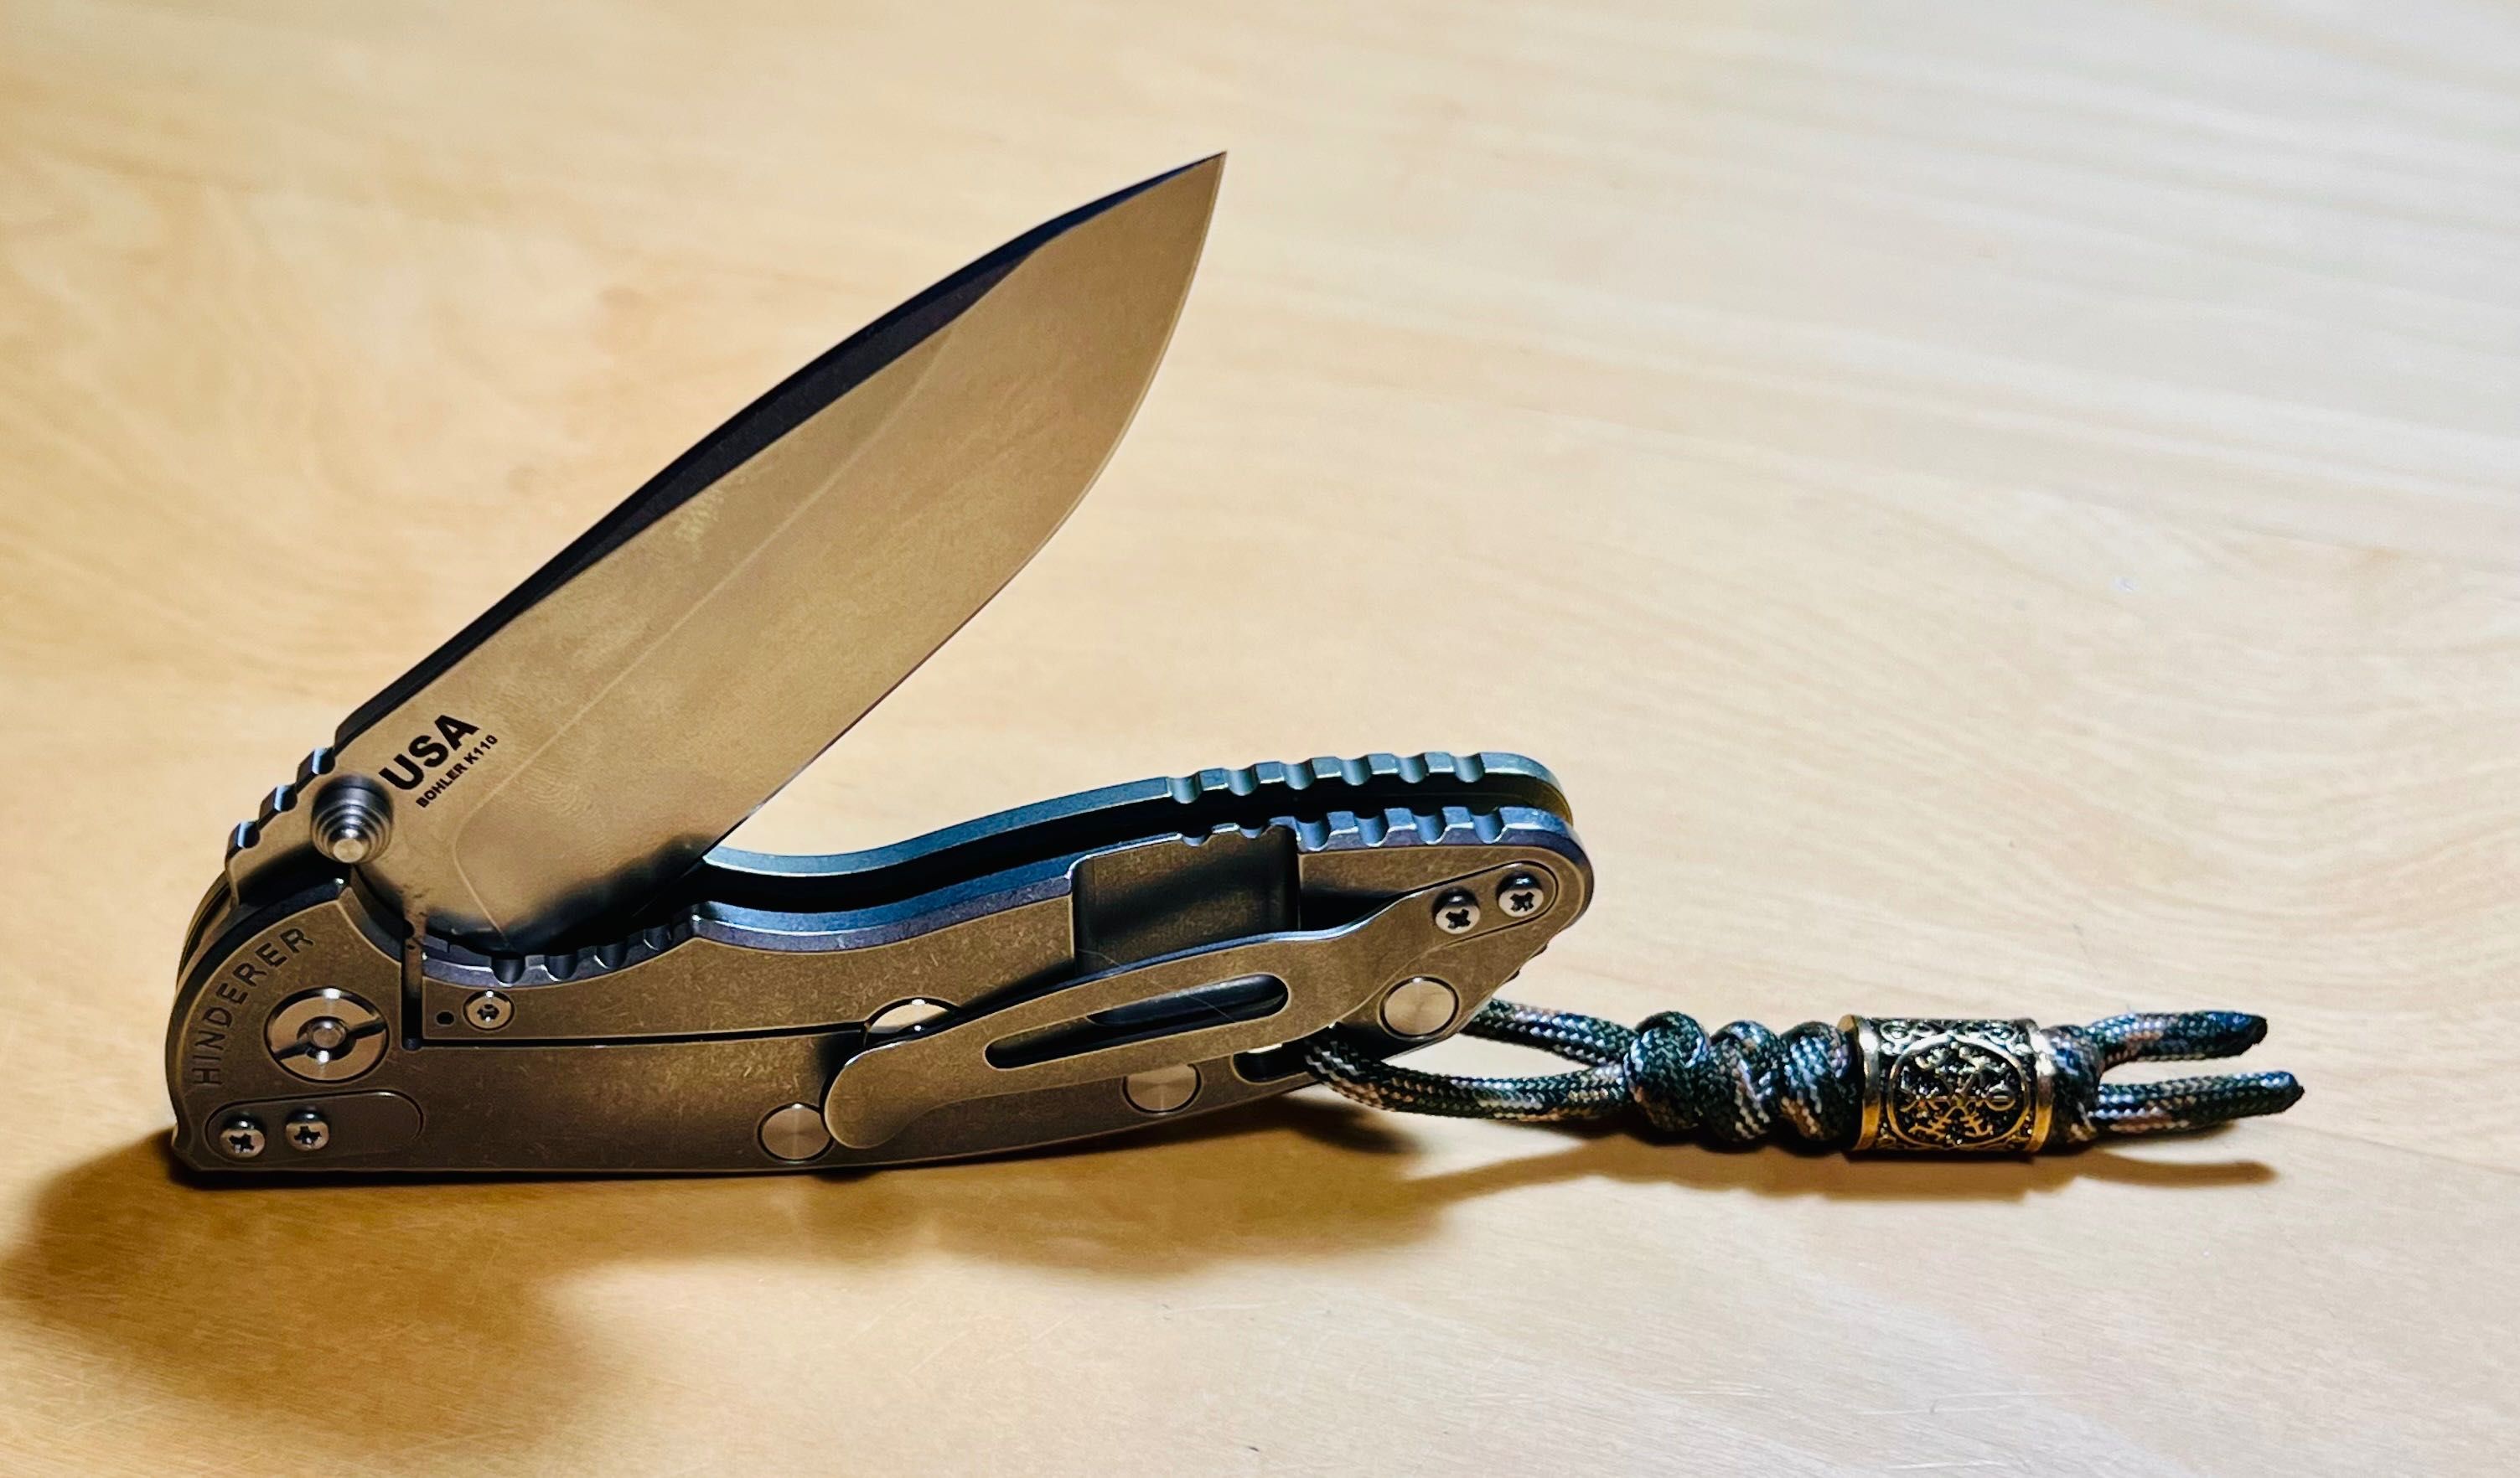 nowy nóż składany firmy Jufule Xm-18 Gold Tytan K110 wzór Hinderer